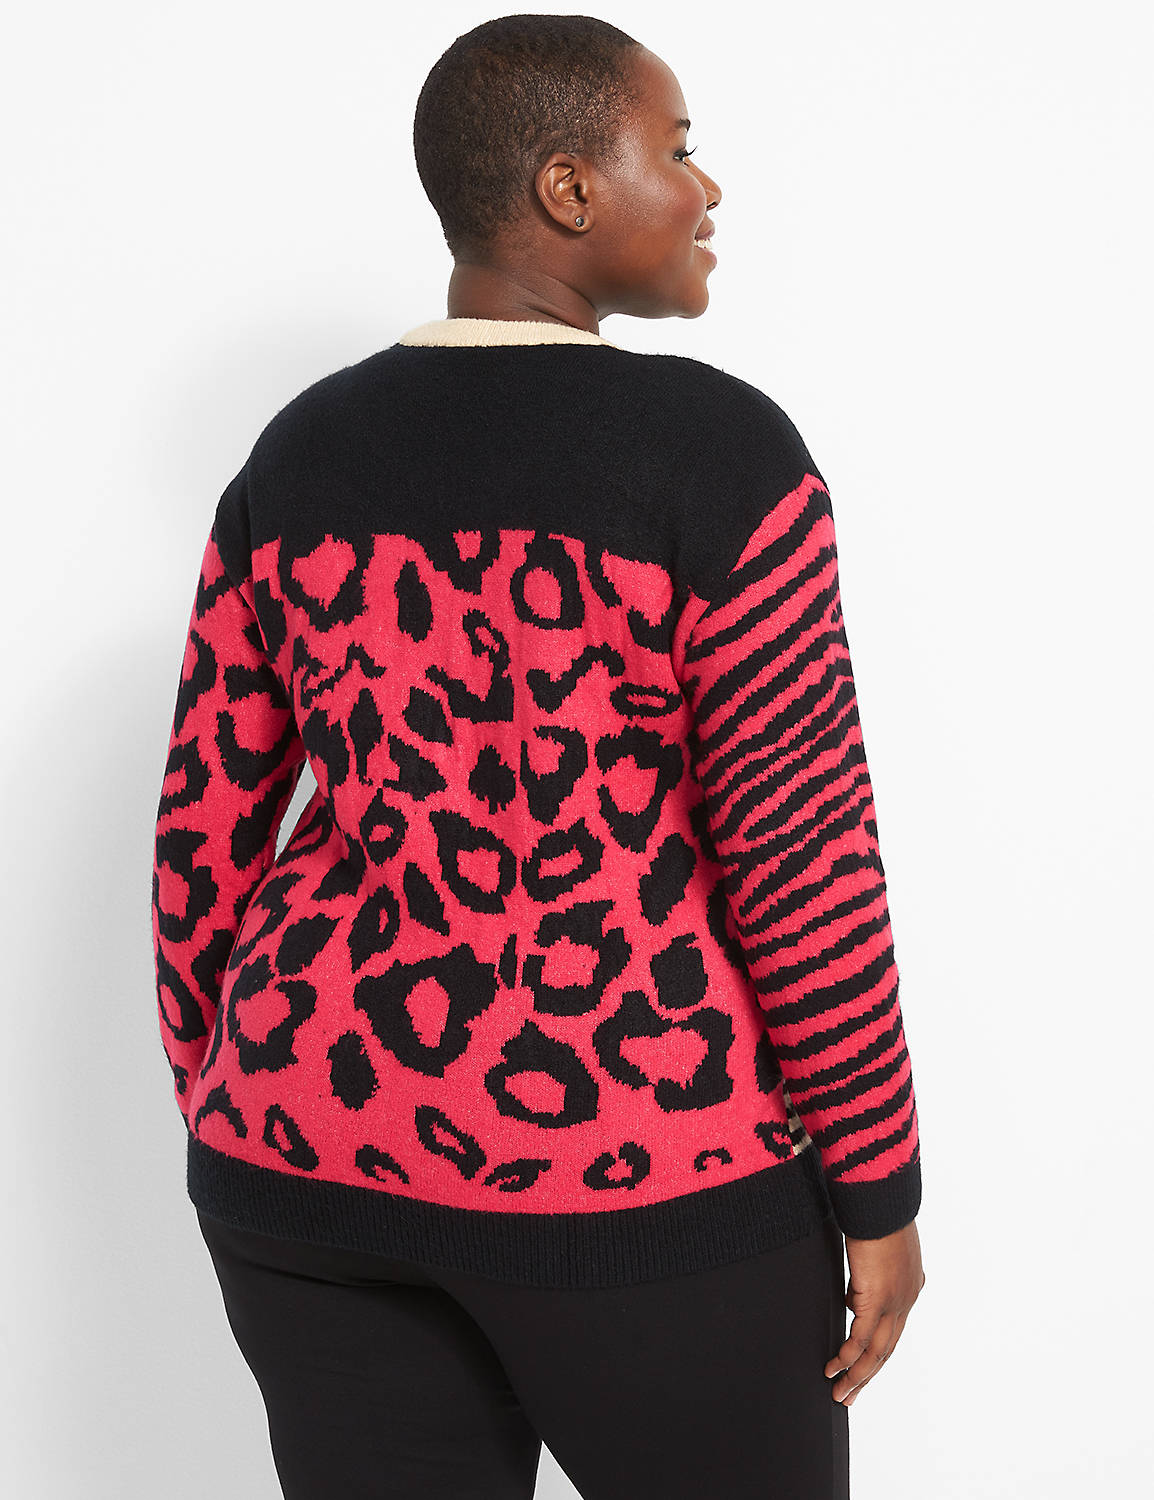 Animal-Print Jacquard Sweater Product Image 2